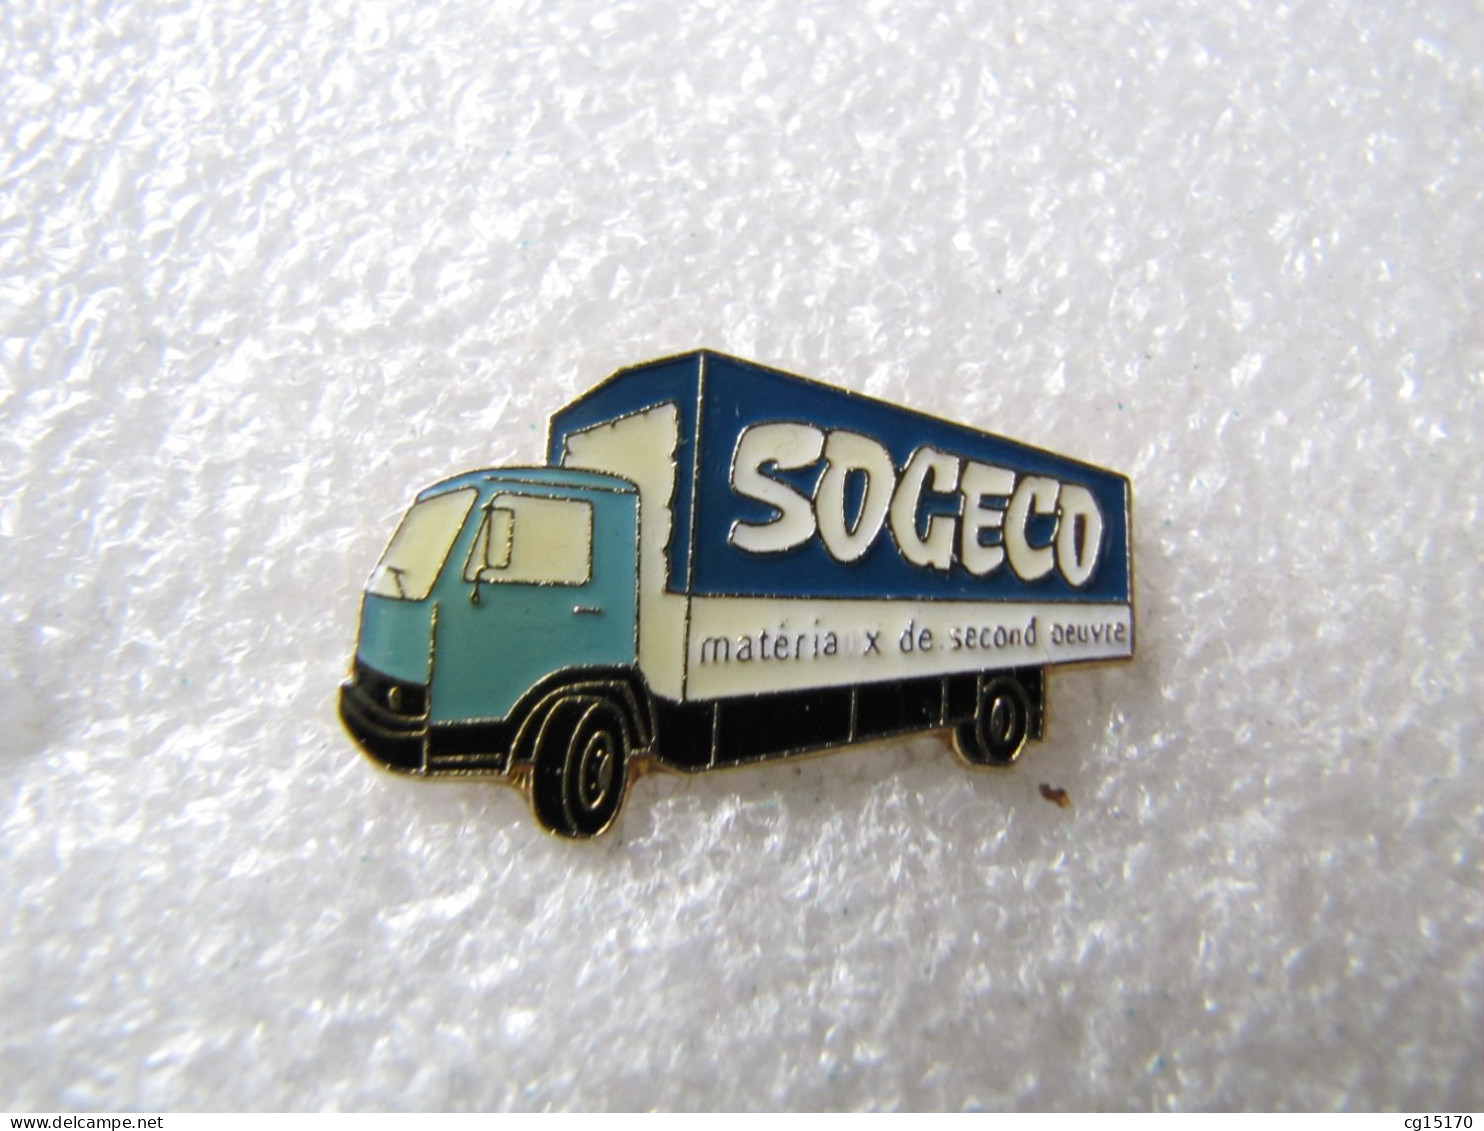 PIN'S    TRANSPORT  SOGECO - Transports